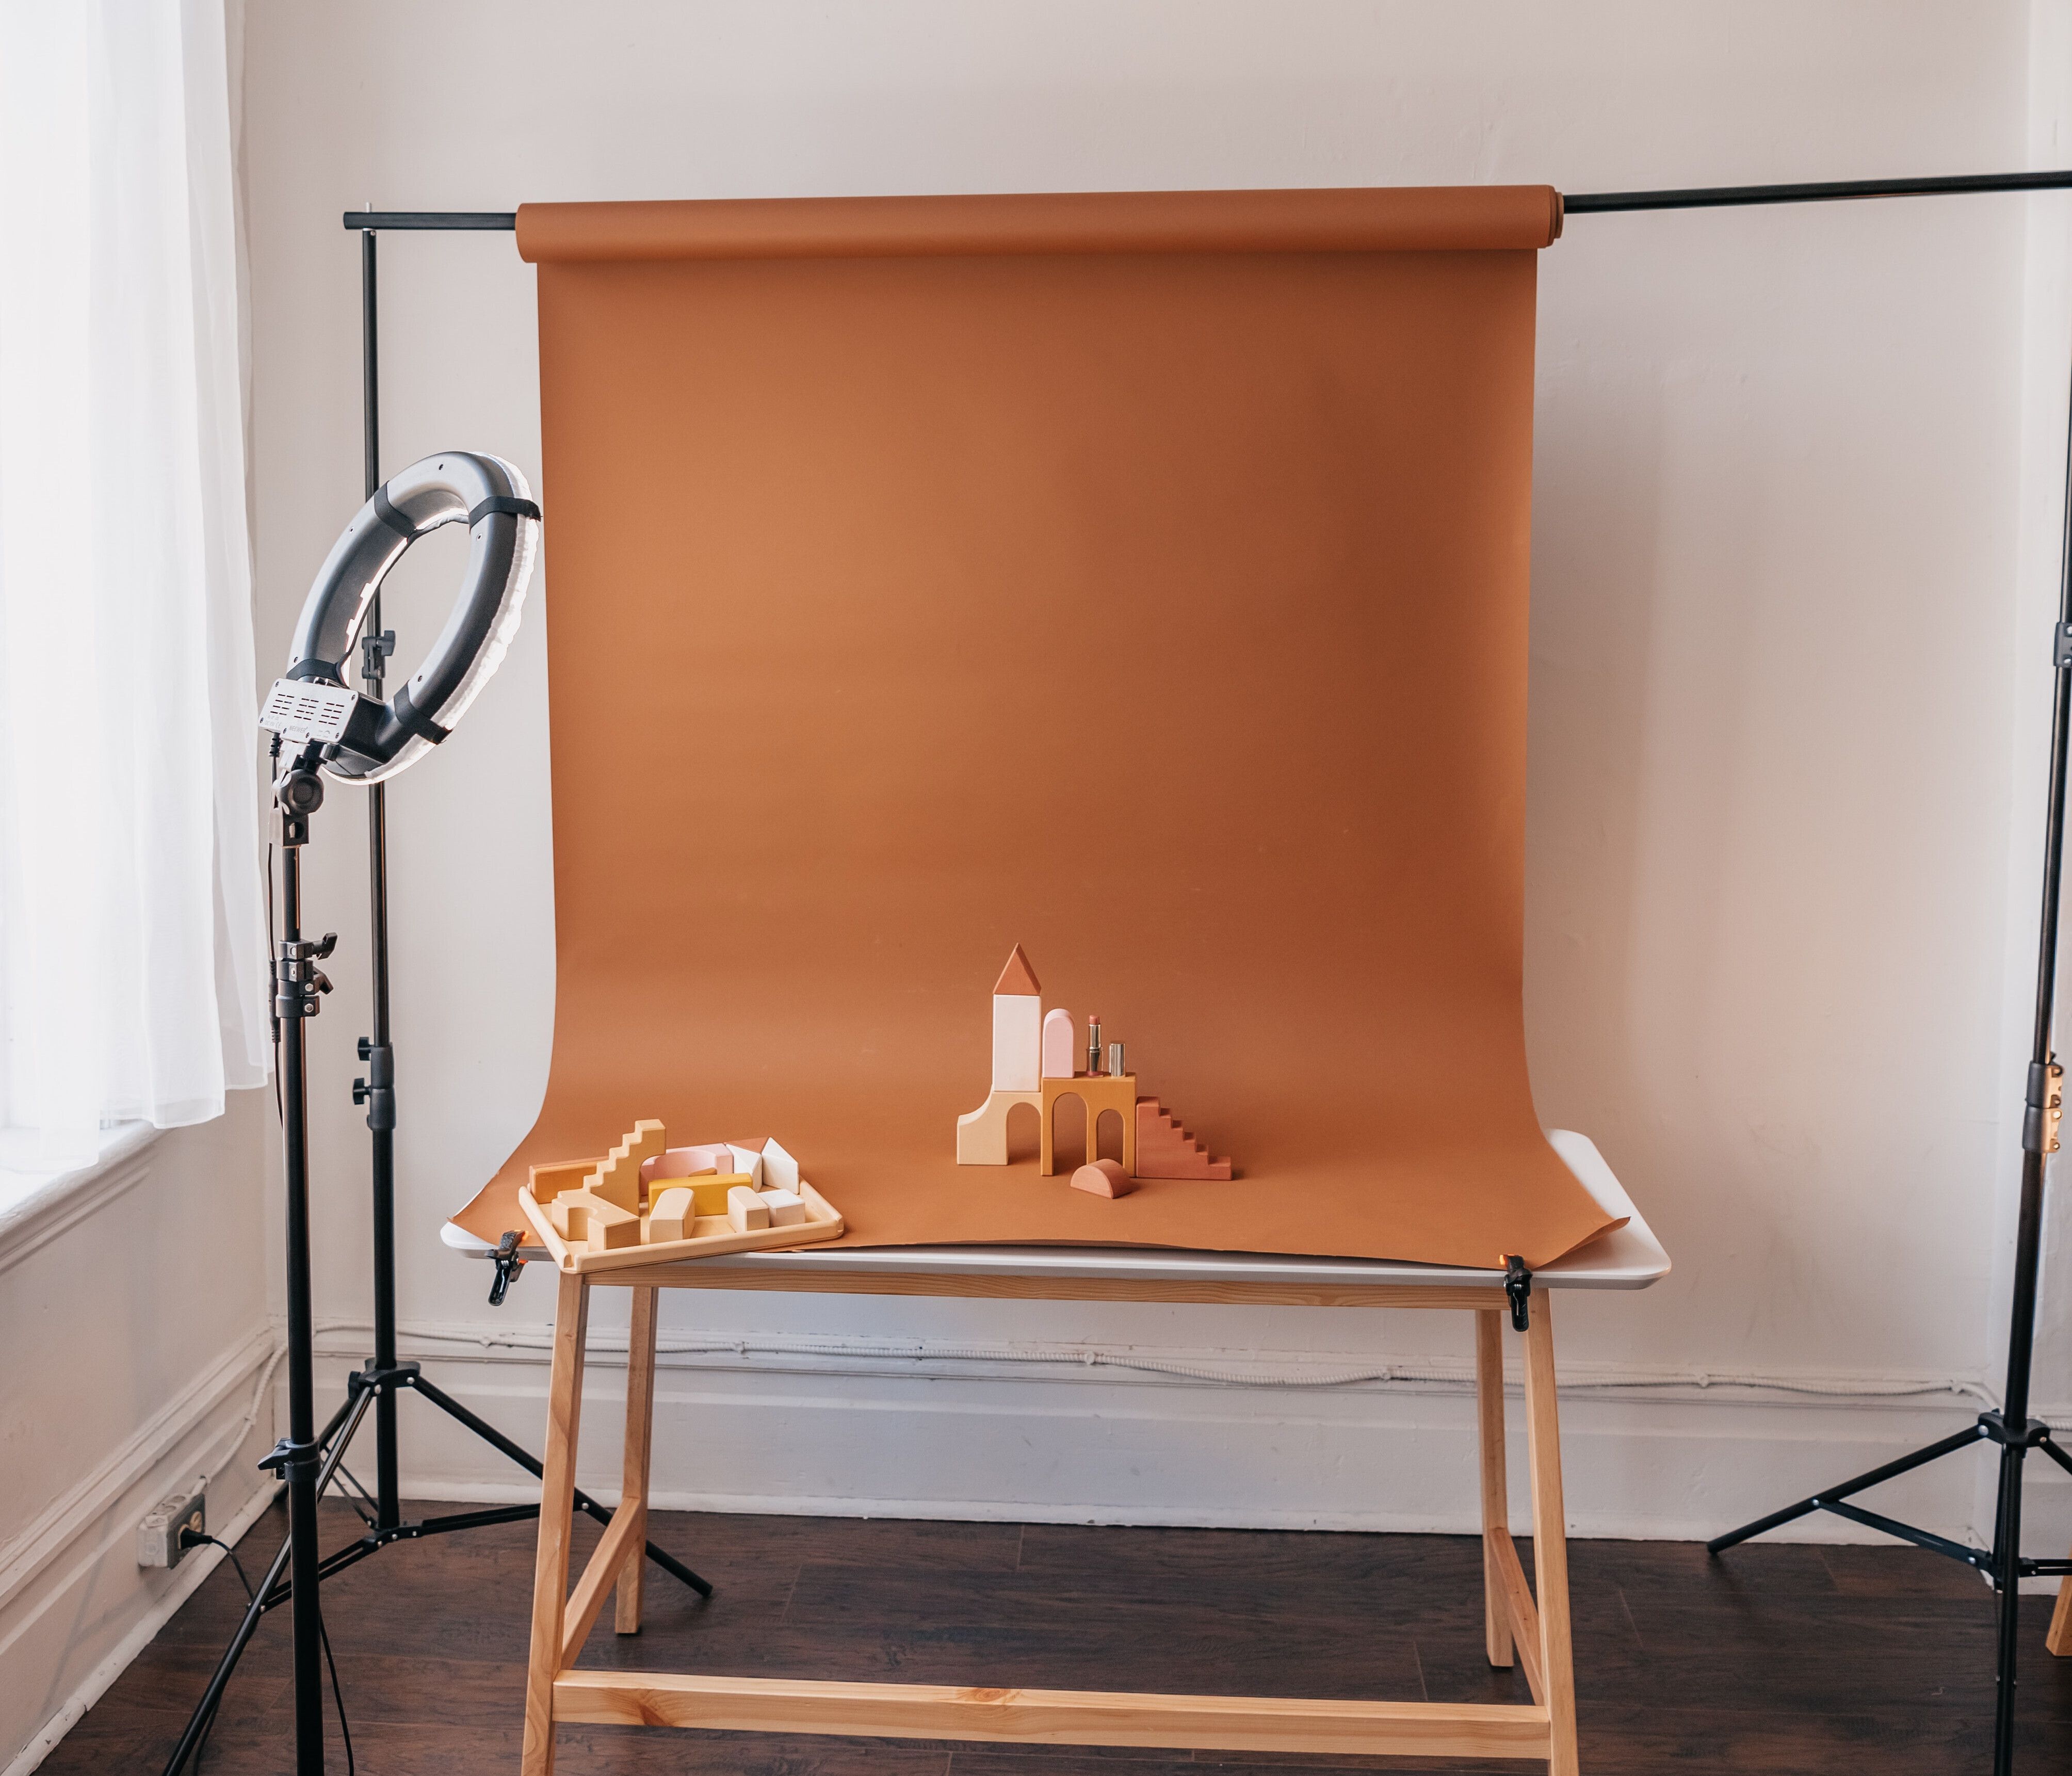 Small photography studio lighting and backdrop